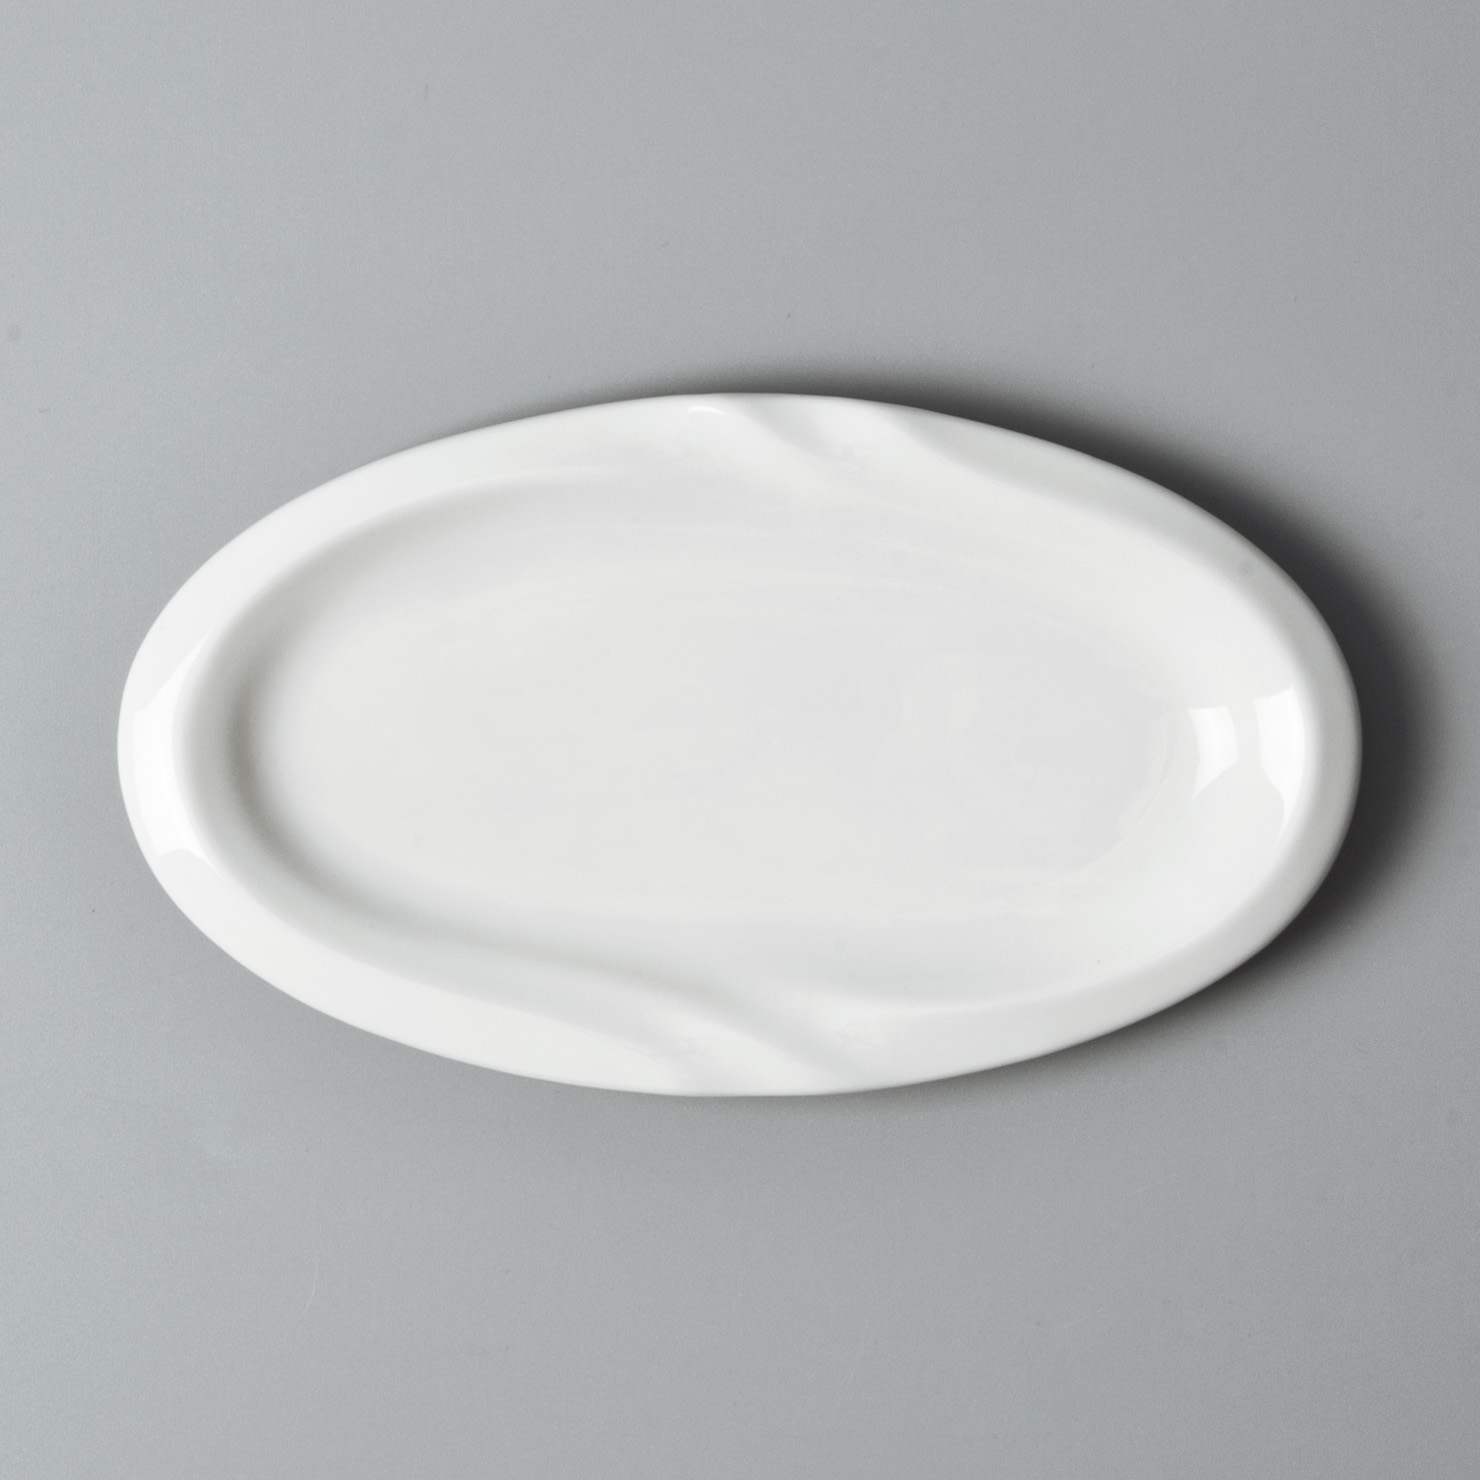 rim white plate set series for hotel-8